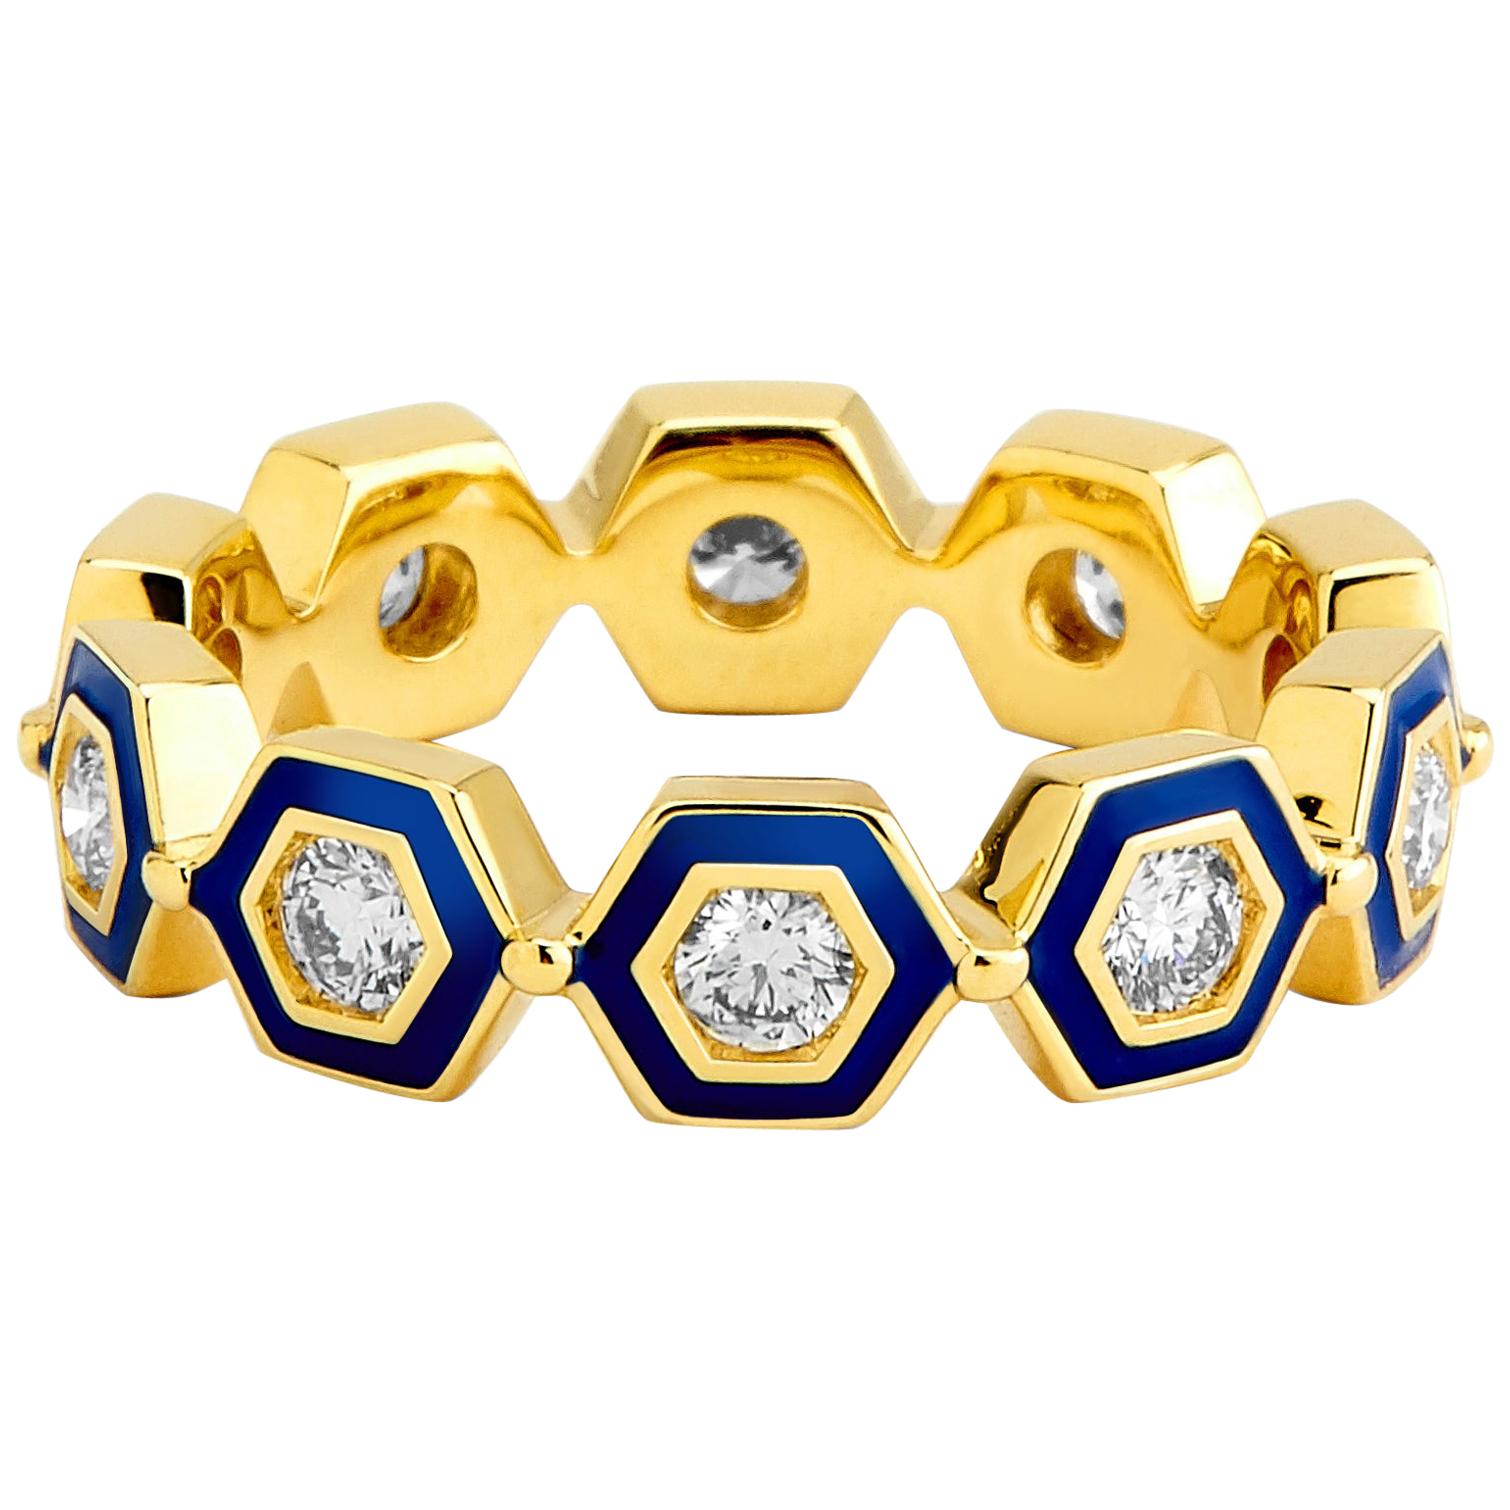 Syna Yellow Gold Lapis Blue Enamel Ring with Diamonds